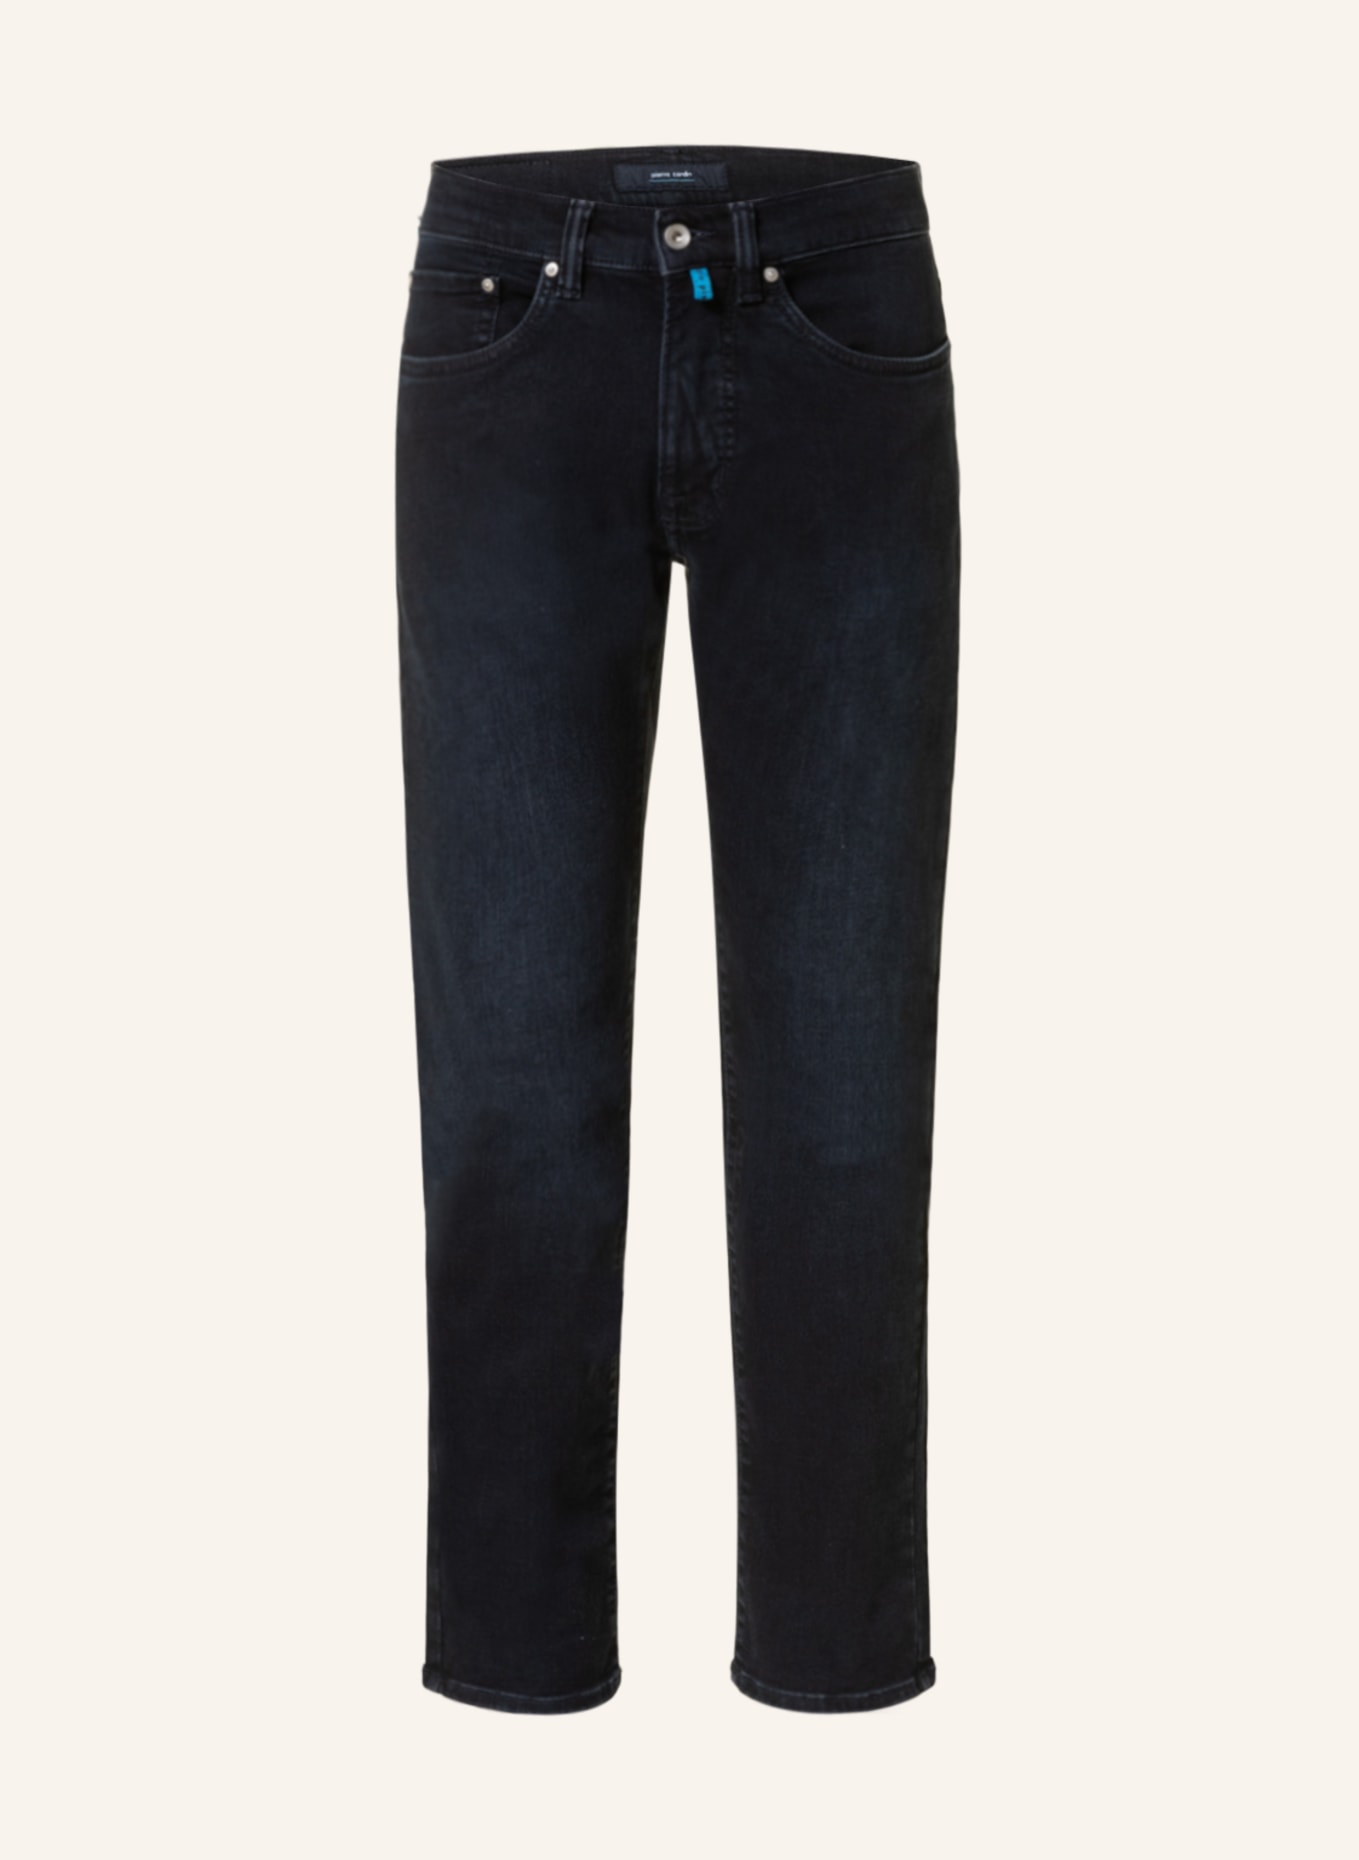 pierre cardin Jeans ANTIBES Slim Fit , Farbe: 6802 blue/black used (Bild 1)